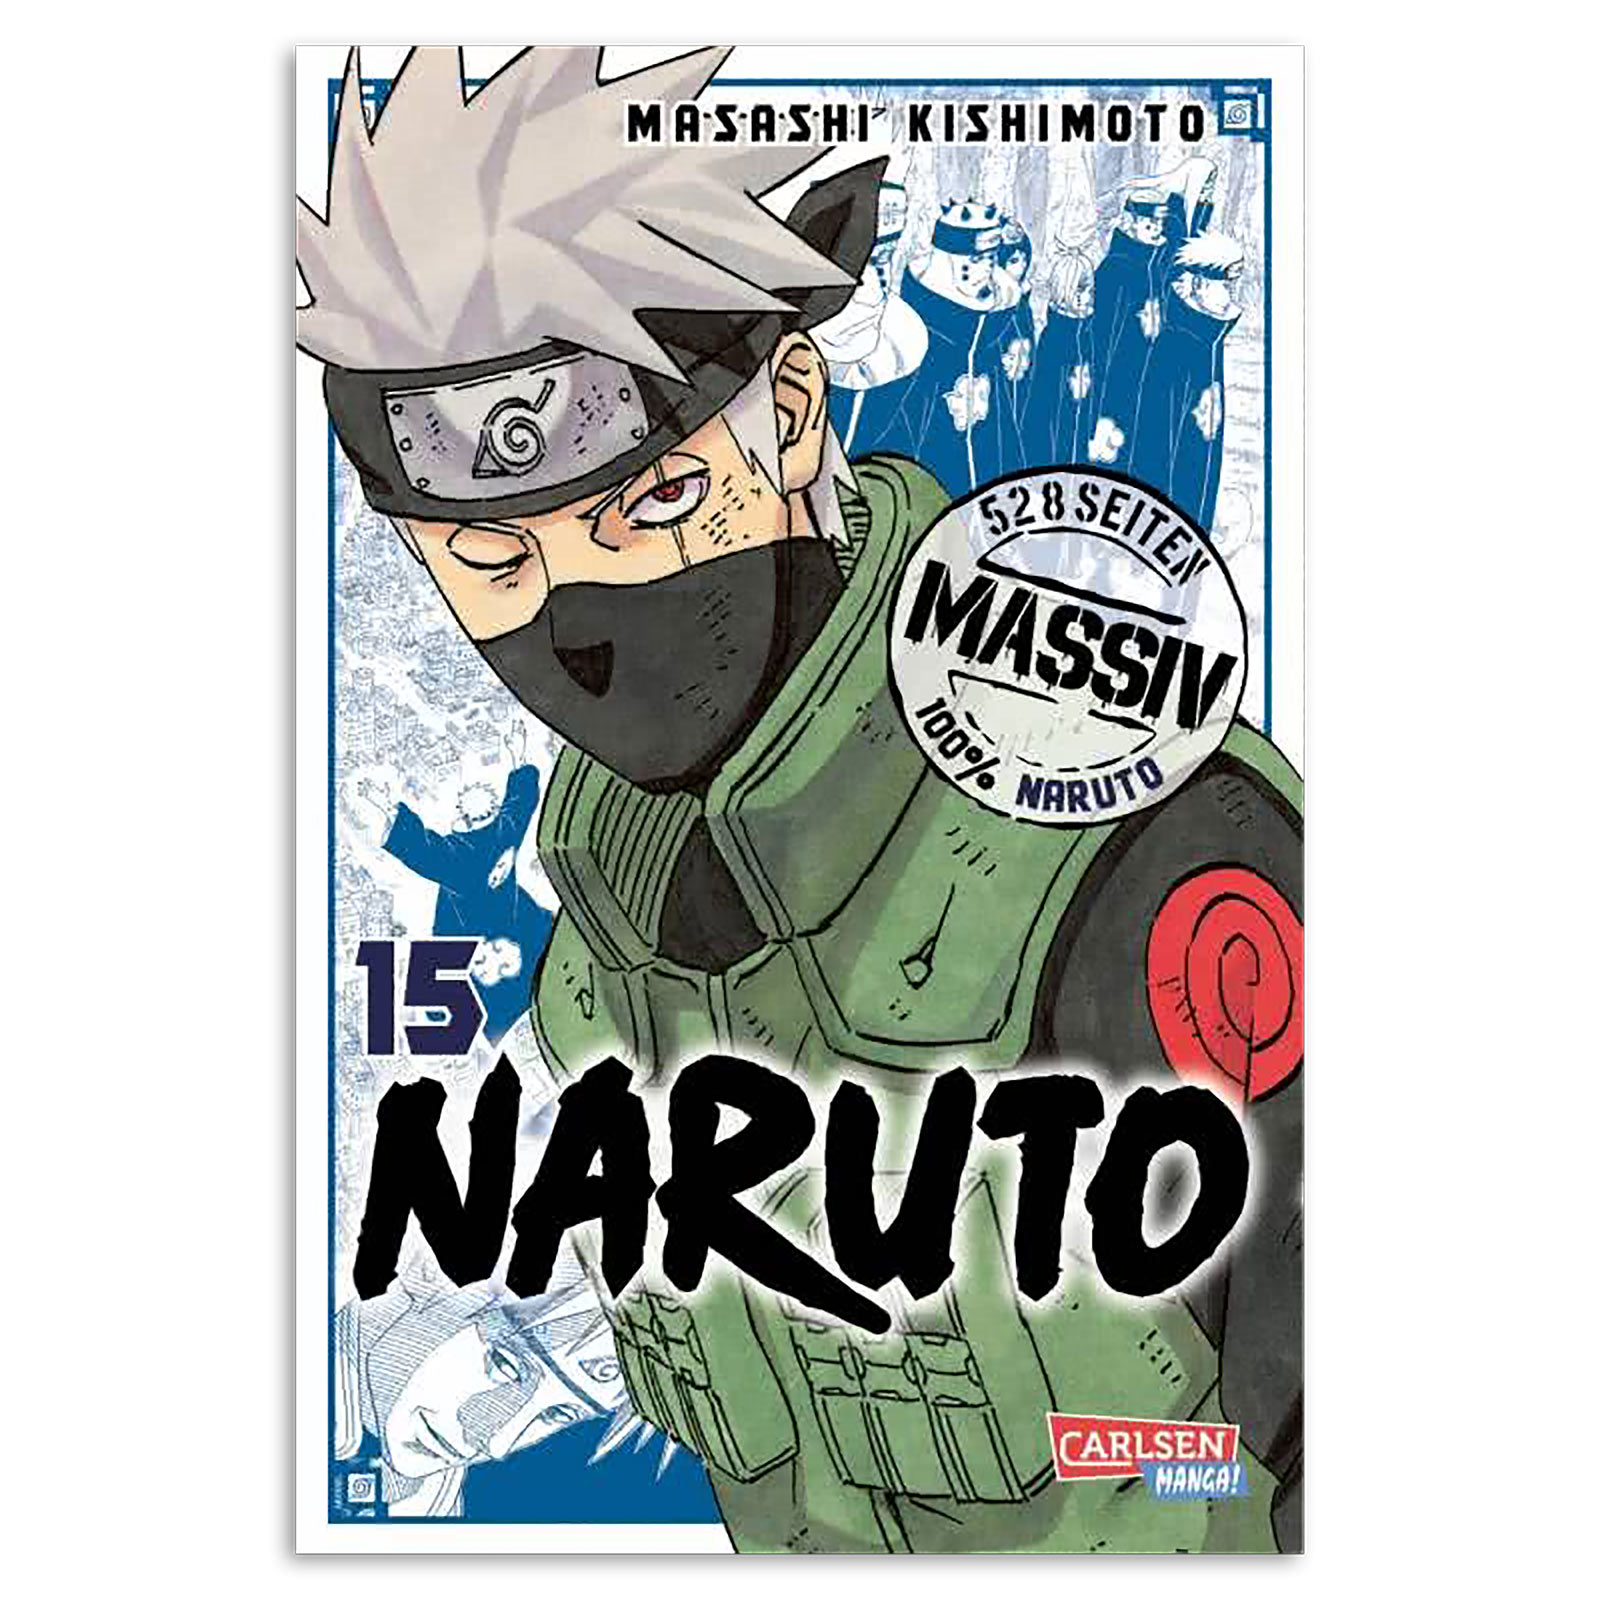 Naruto - Volume 15 Paperback